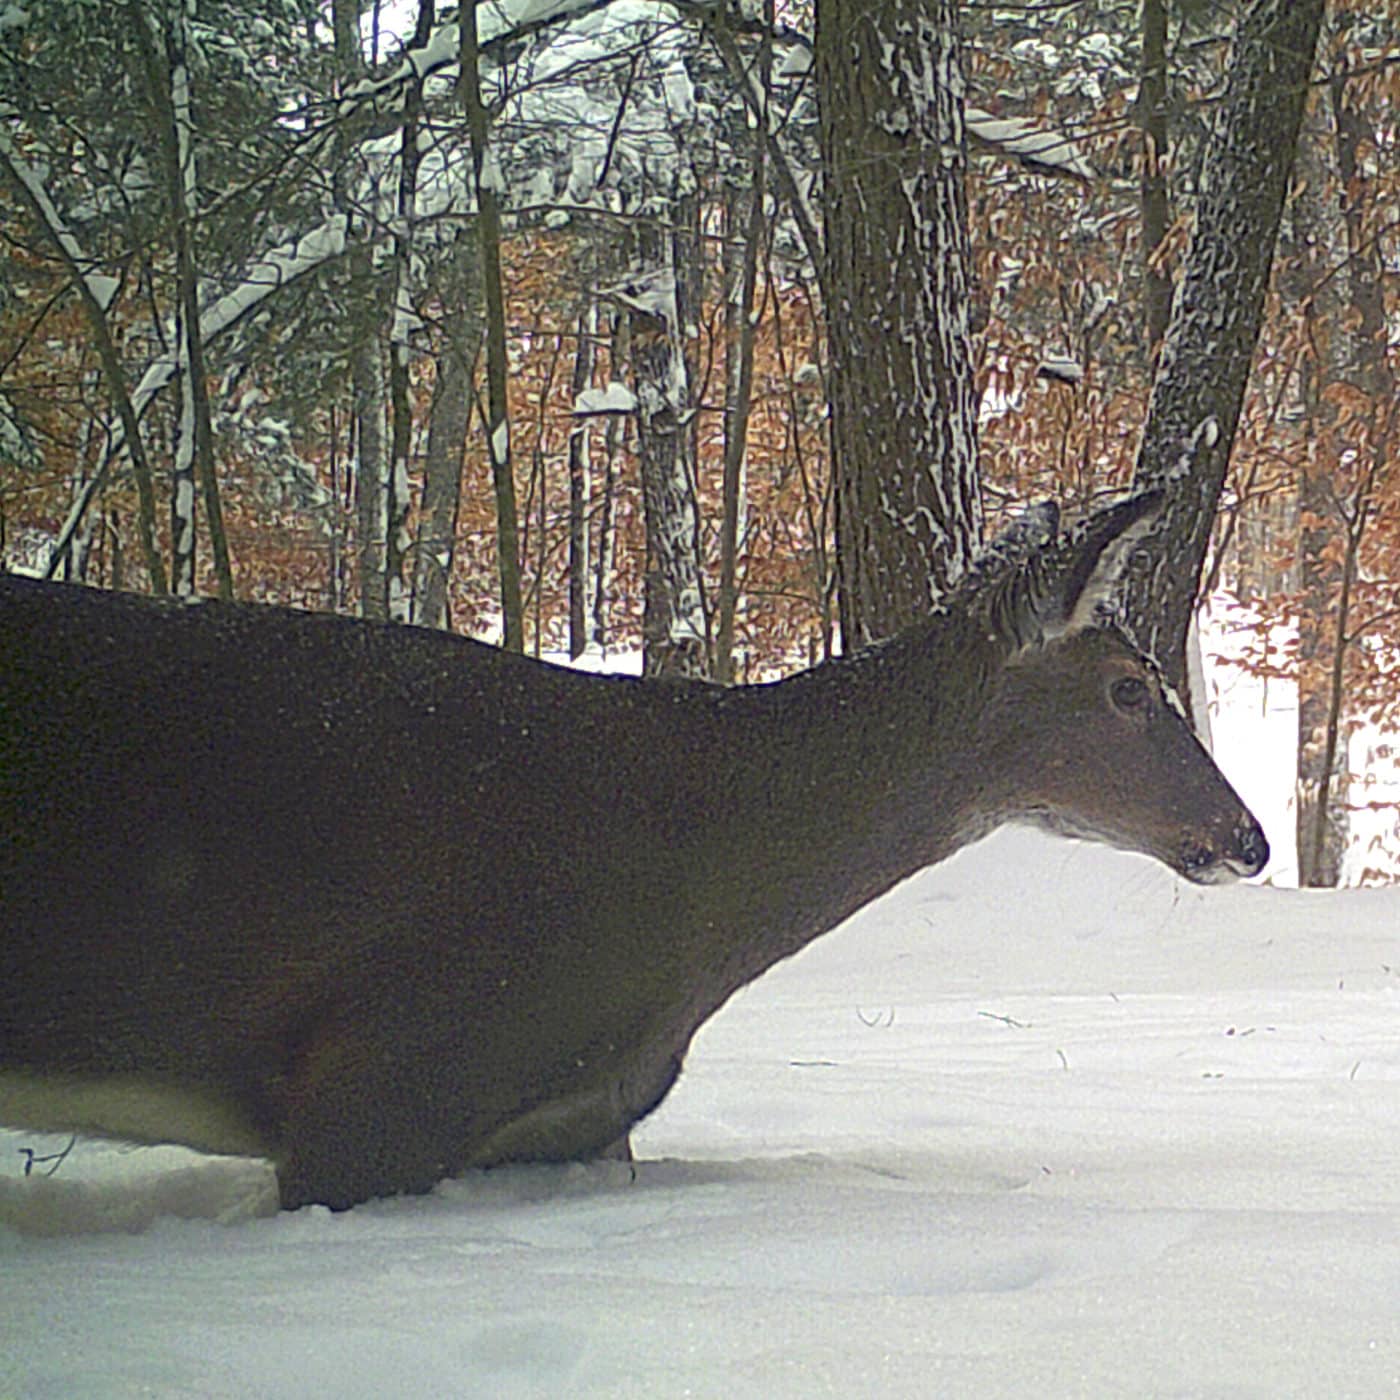 Q & A: How Do Deer Survive Harsh Winter Weather